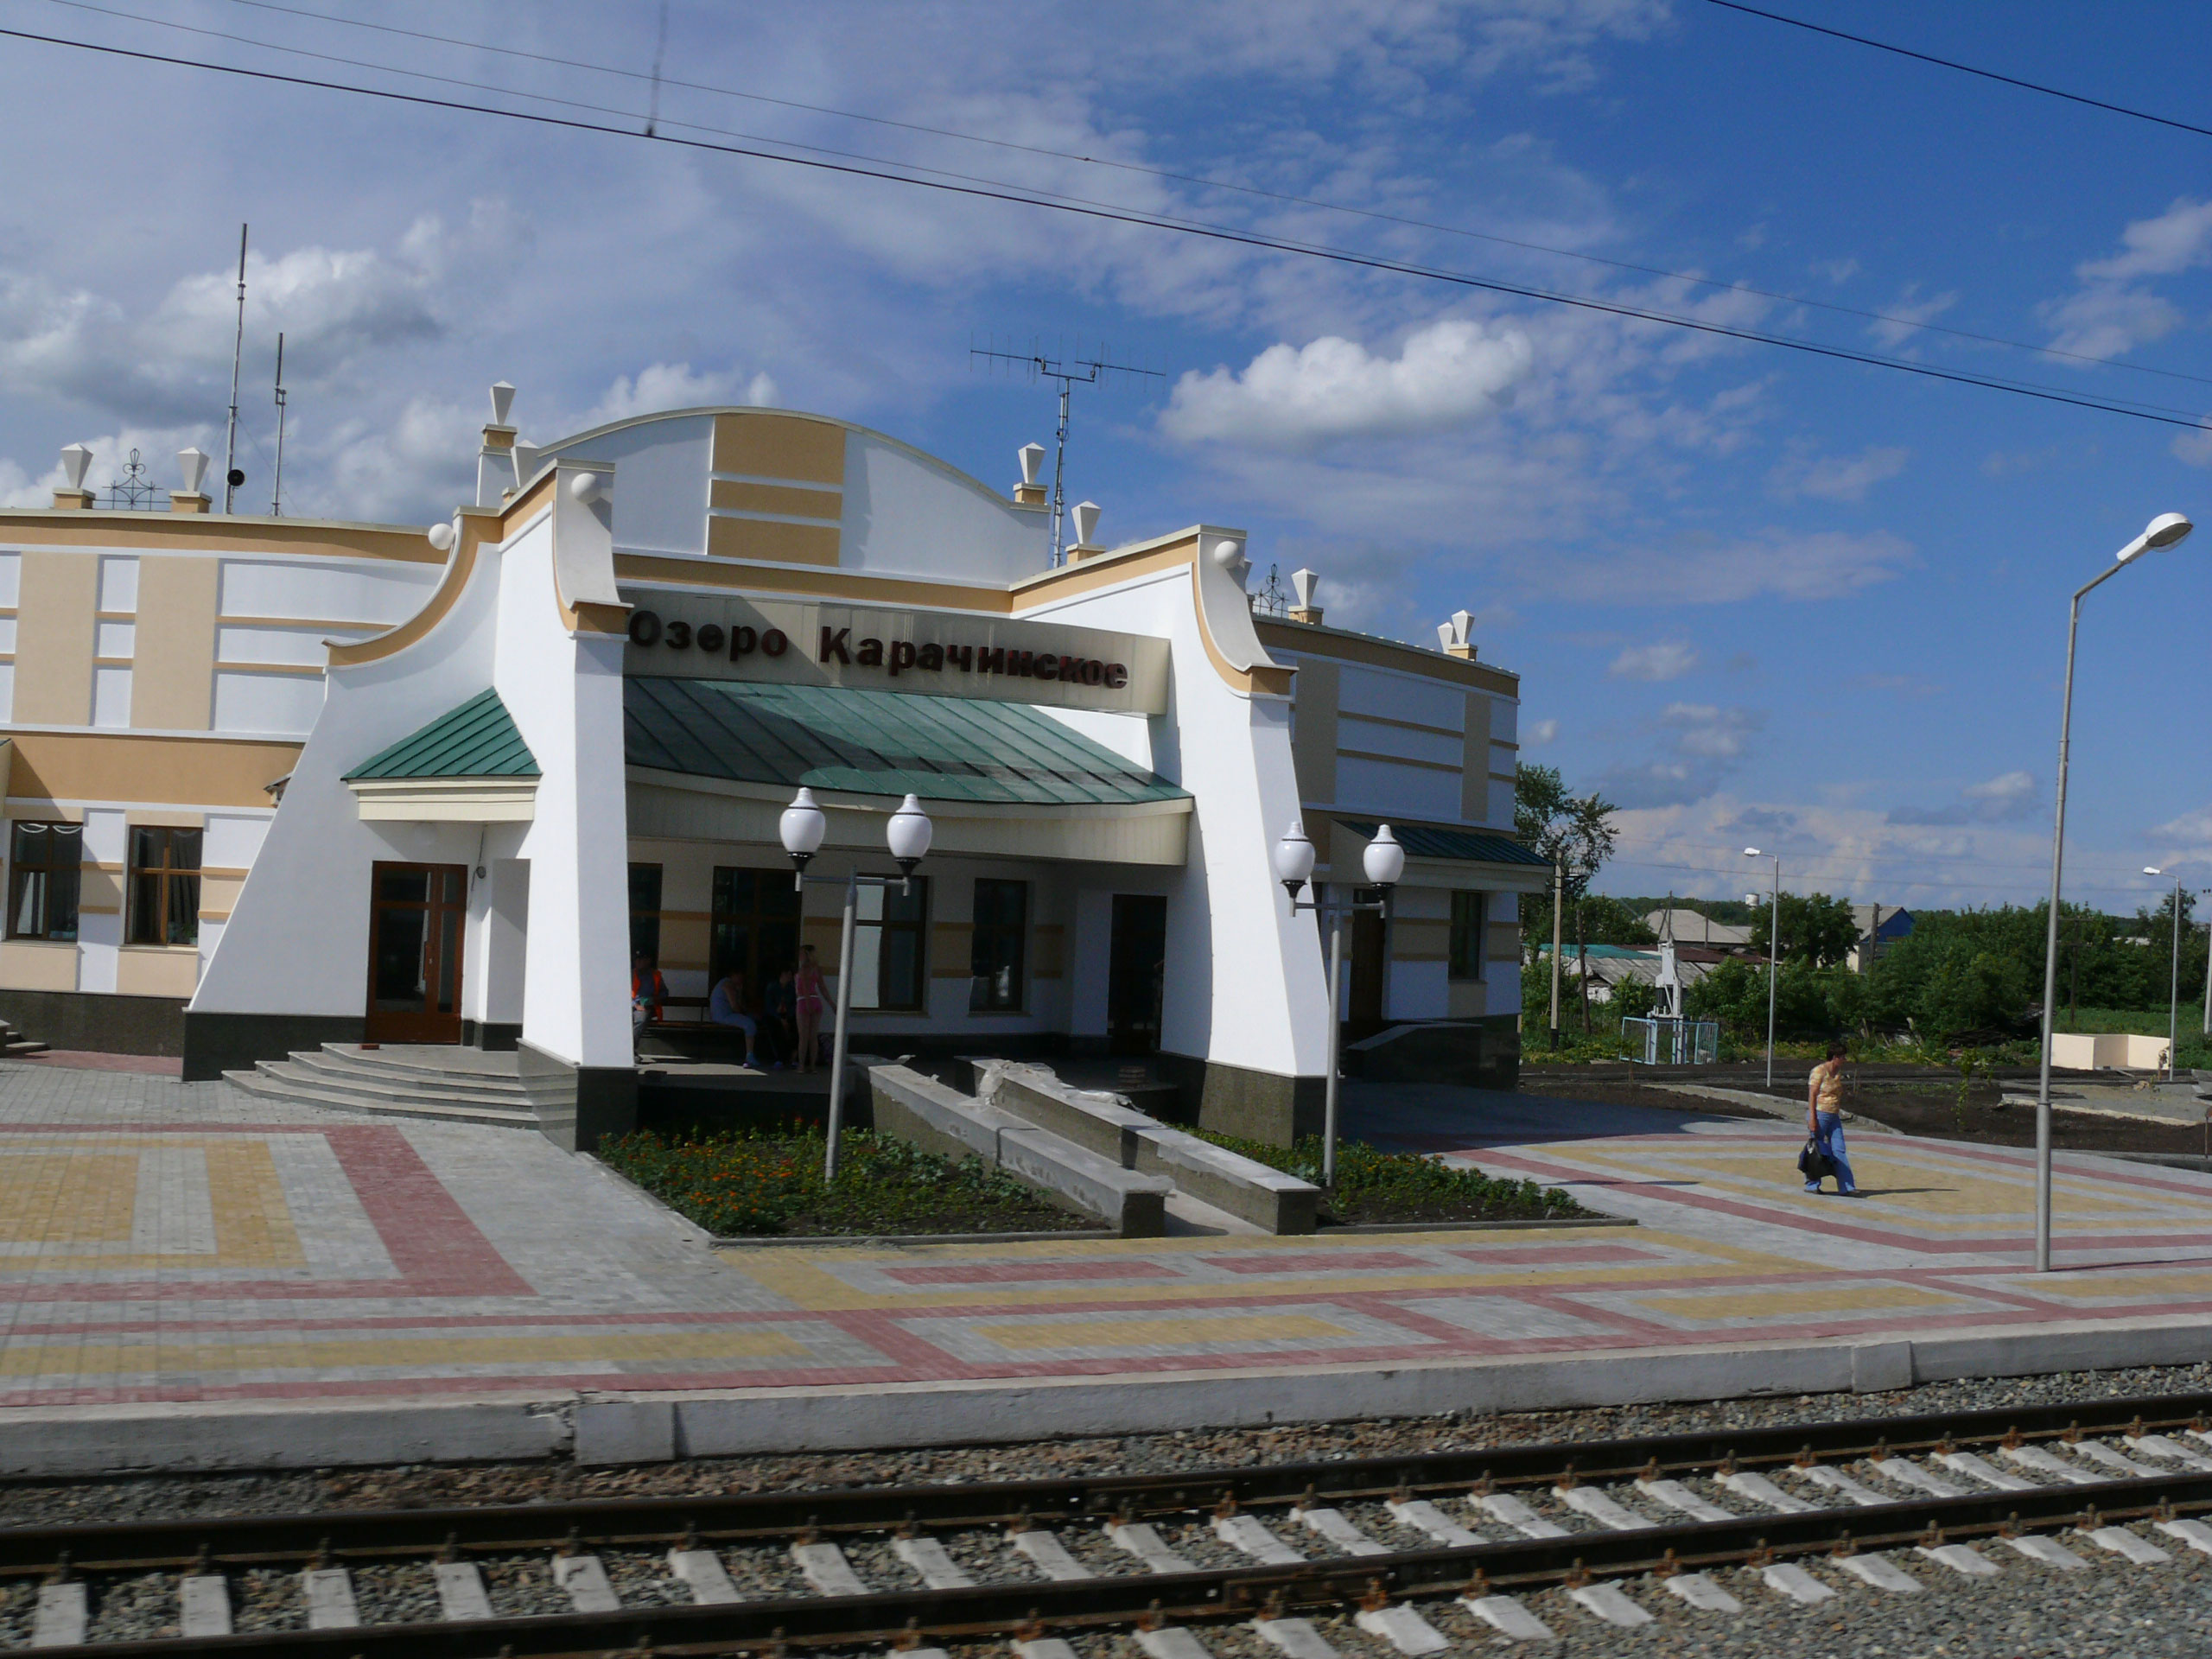 Станция озеро Карачинское